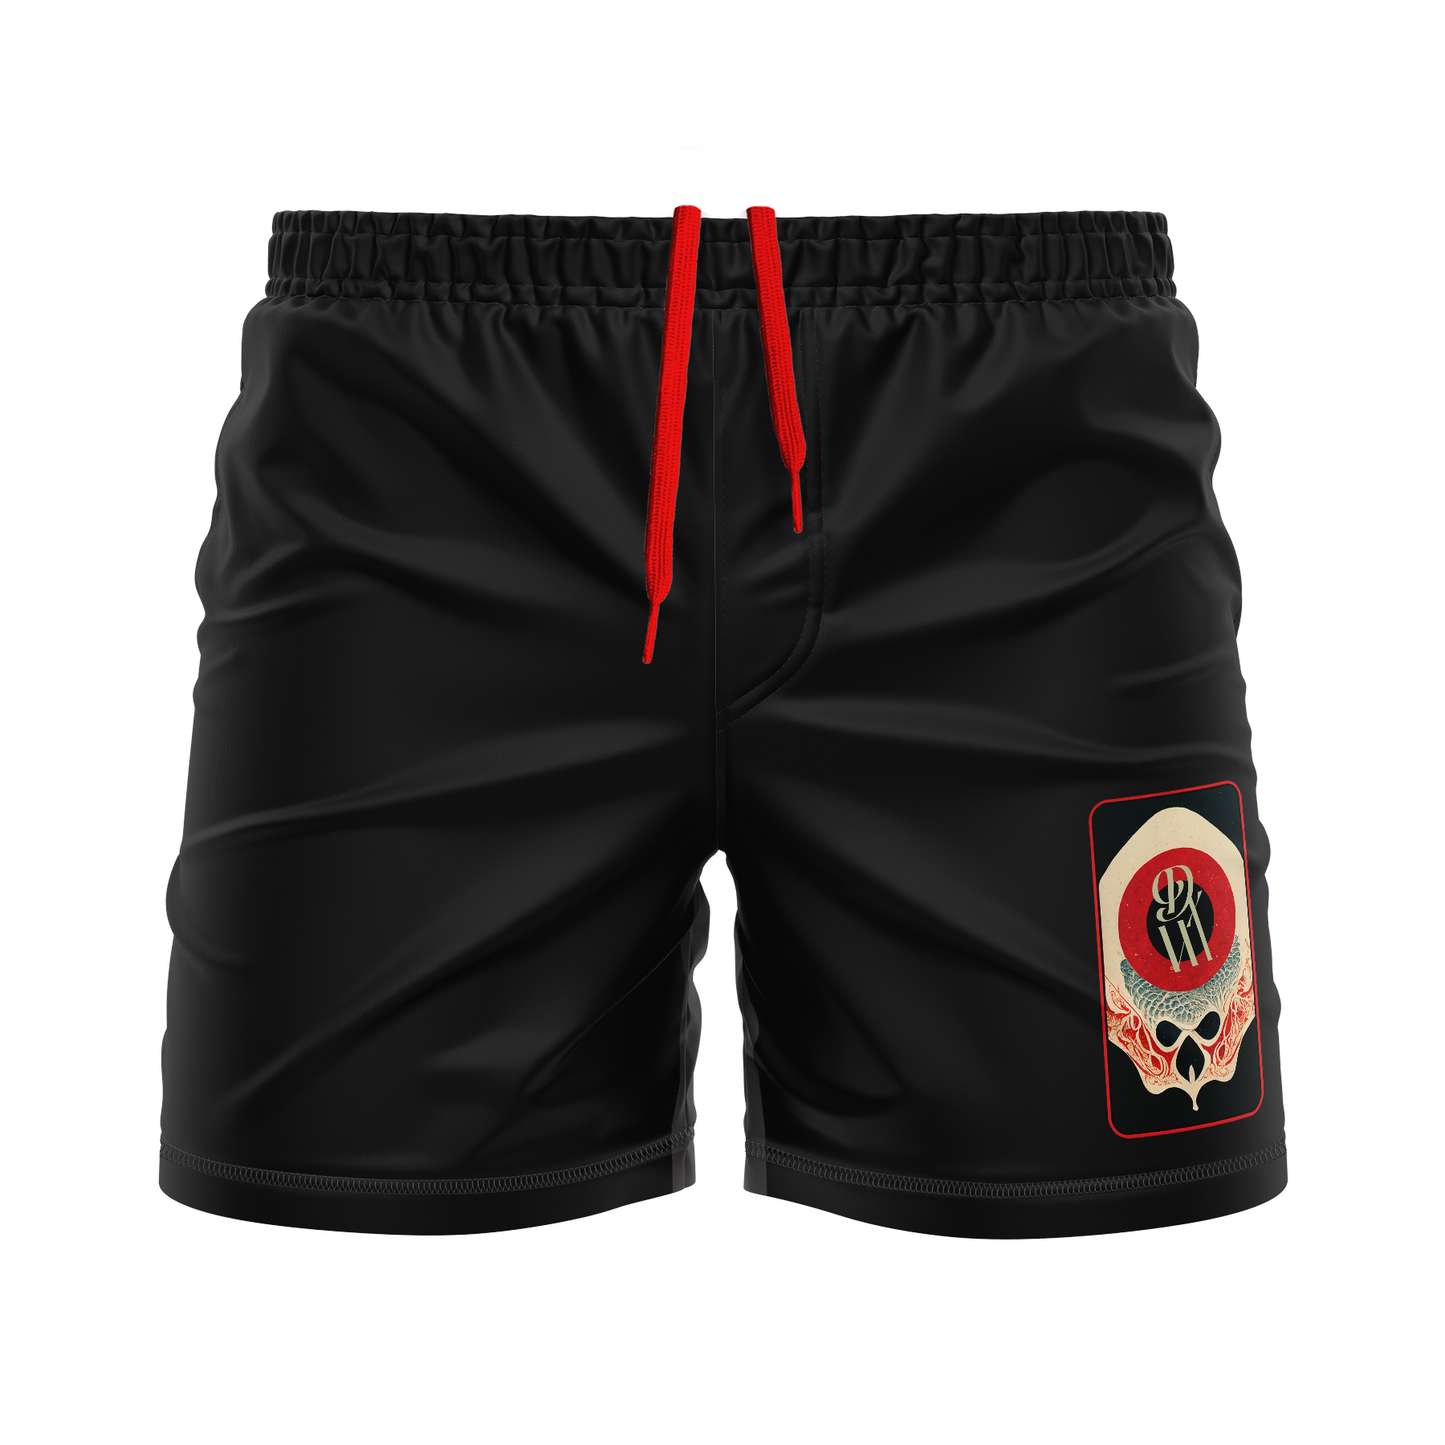 Death by Wristlock: Ouroboros men's FC shorts, black